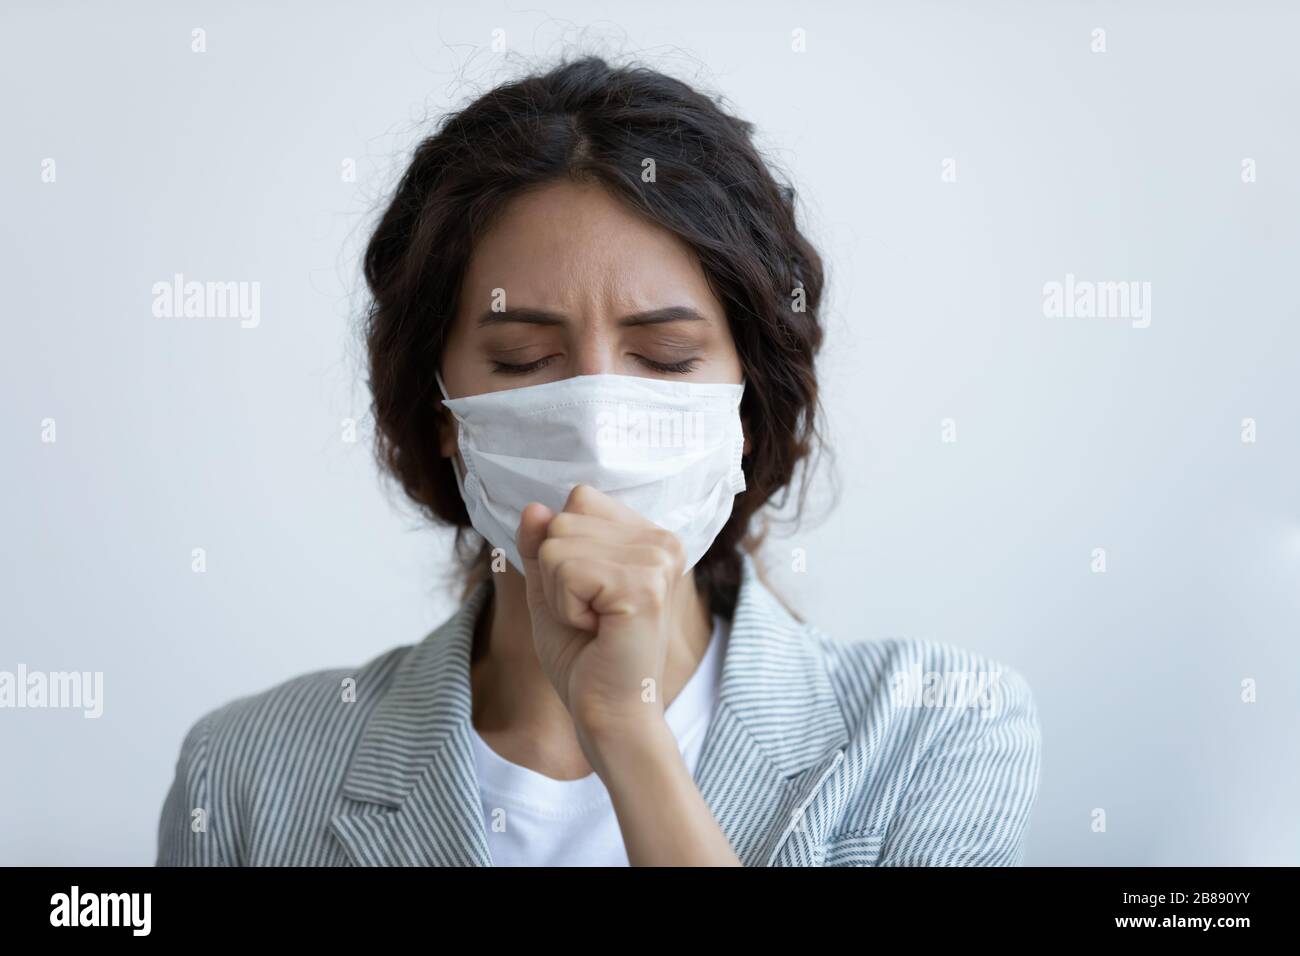 Unhealthy woman in mask coughing having coronavirus disease symptoms Stock Photo